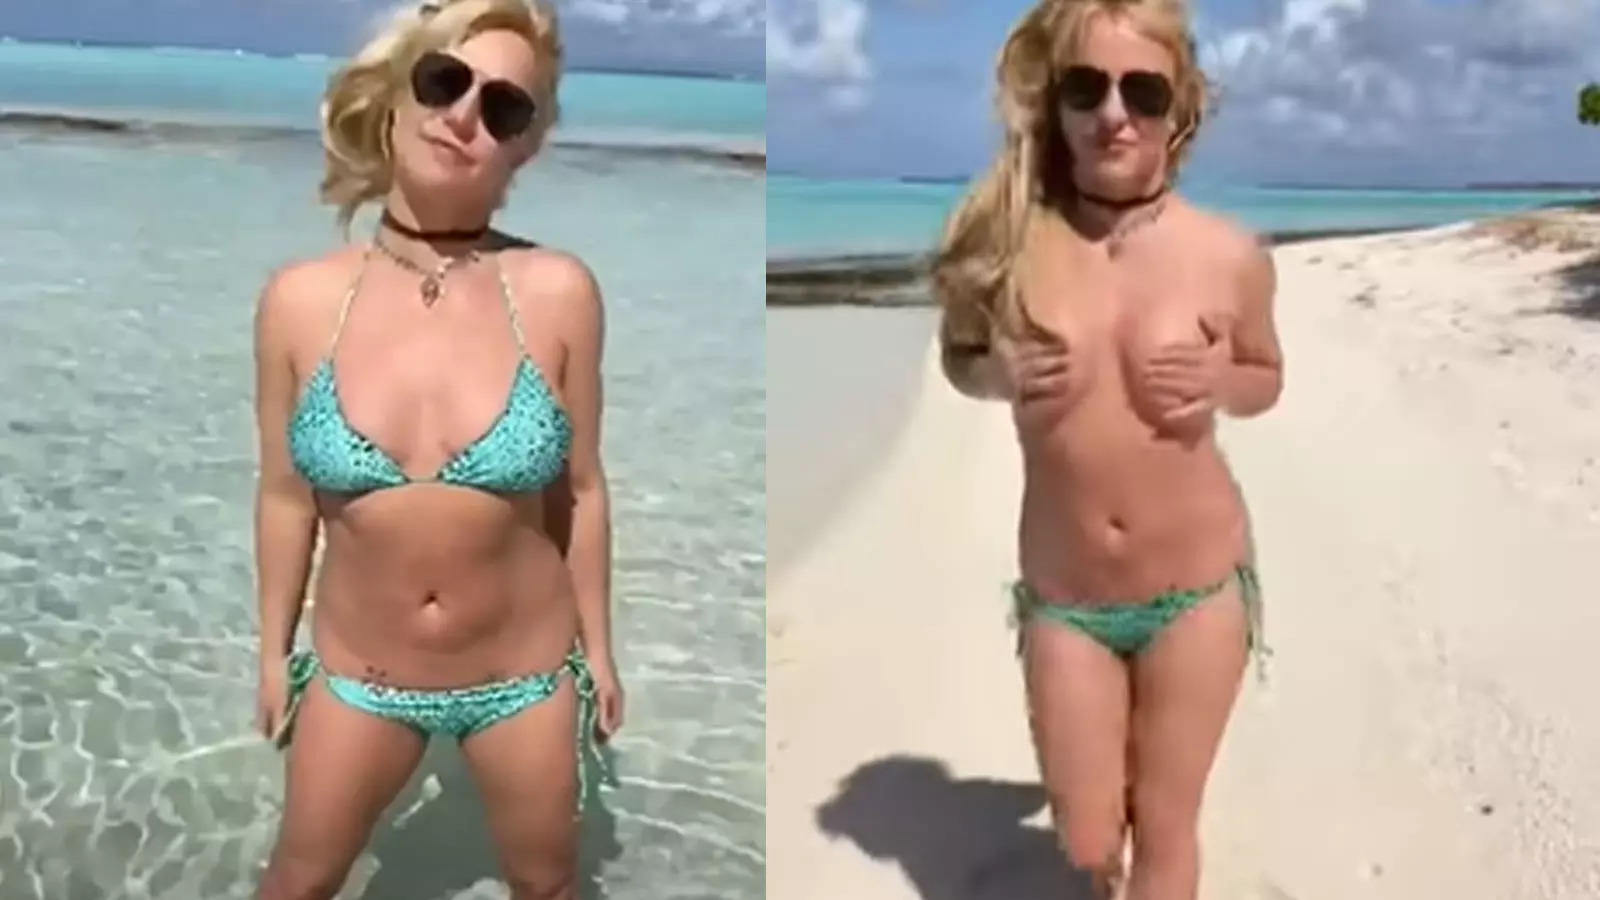 christy briscoe recommends them boys on the beach porn video bikini pic